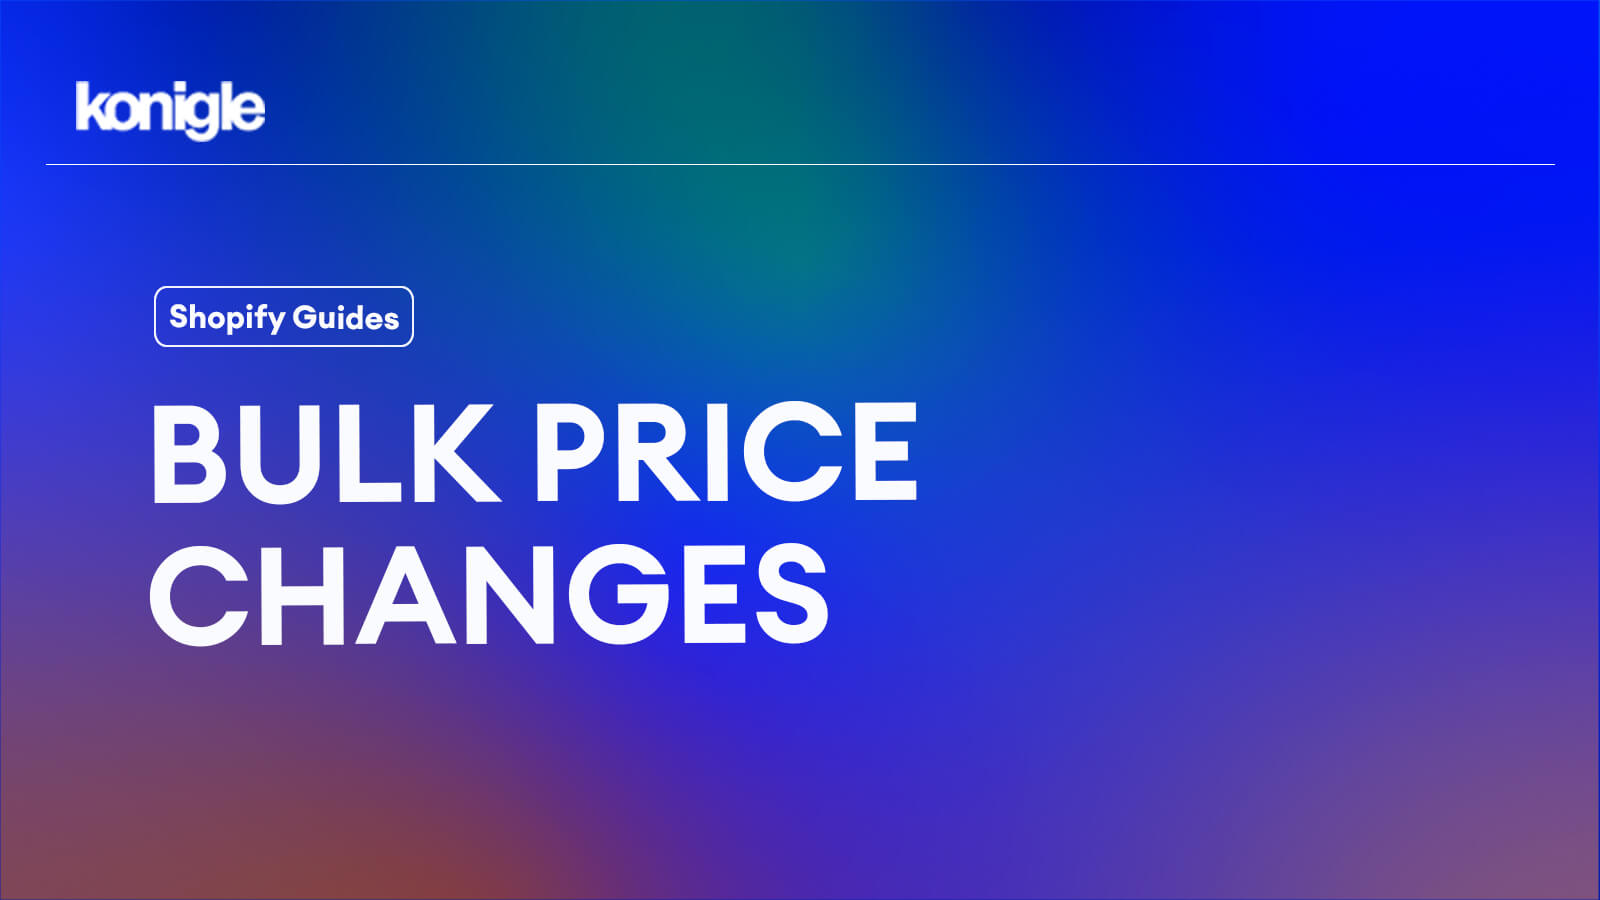 Shopify bulk price change: How to bulk edit prices on Shopify?